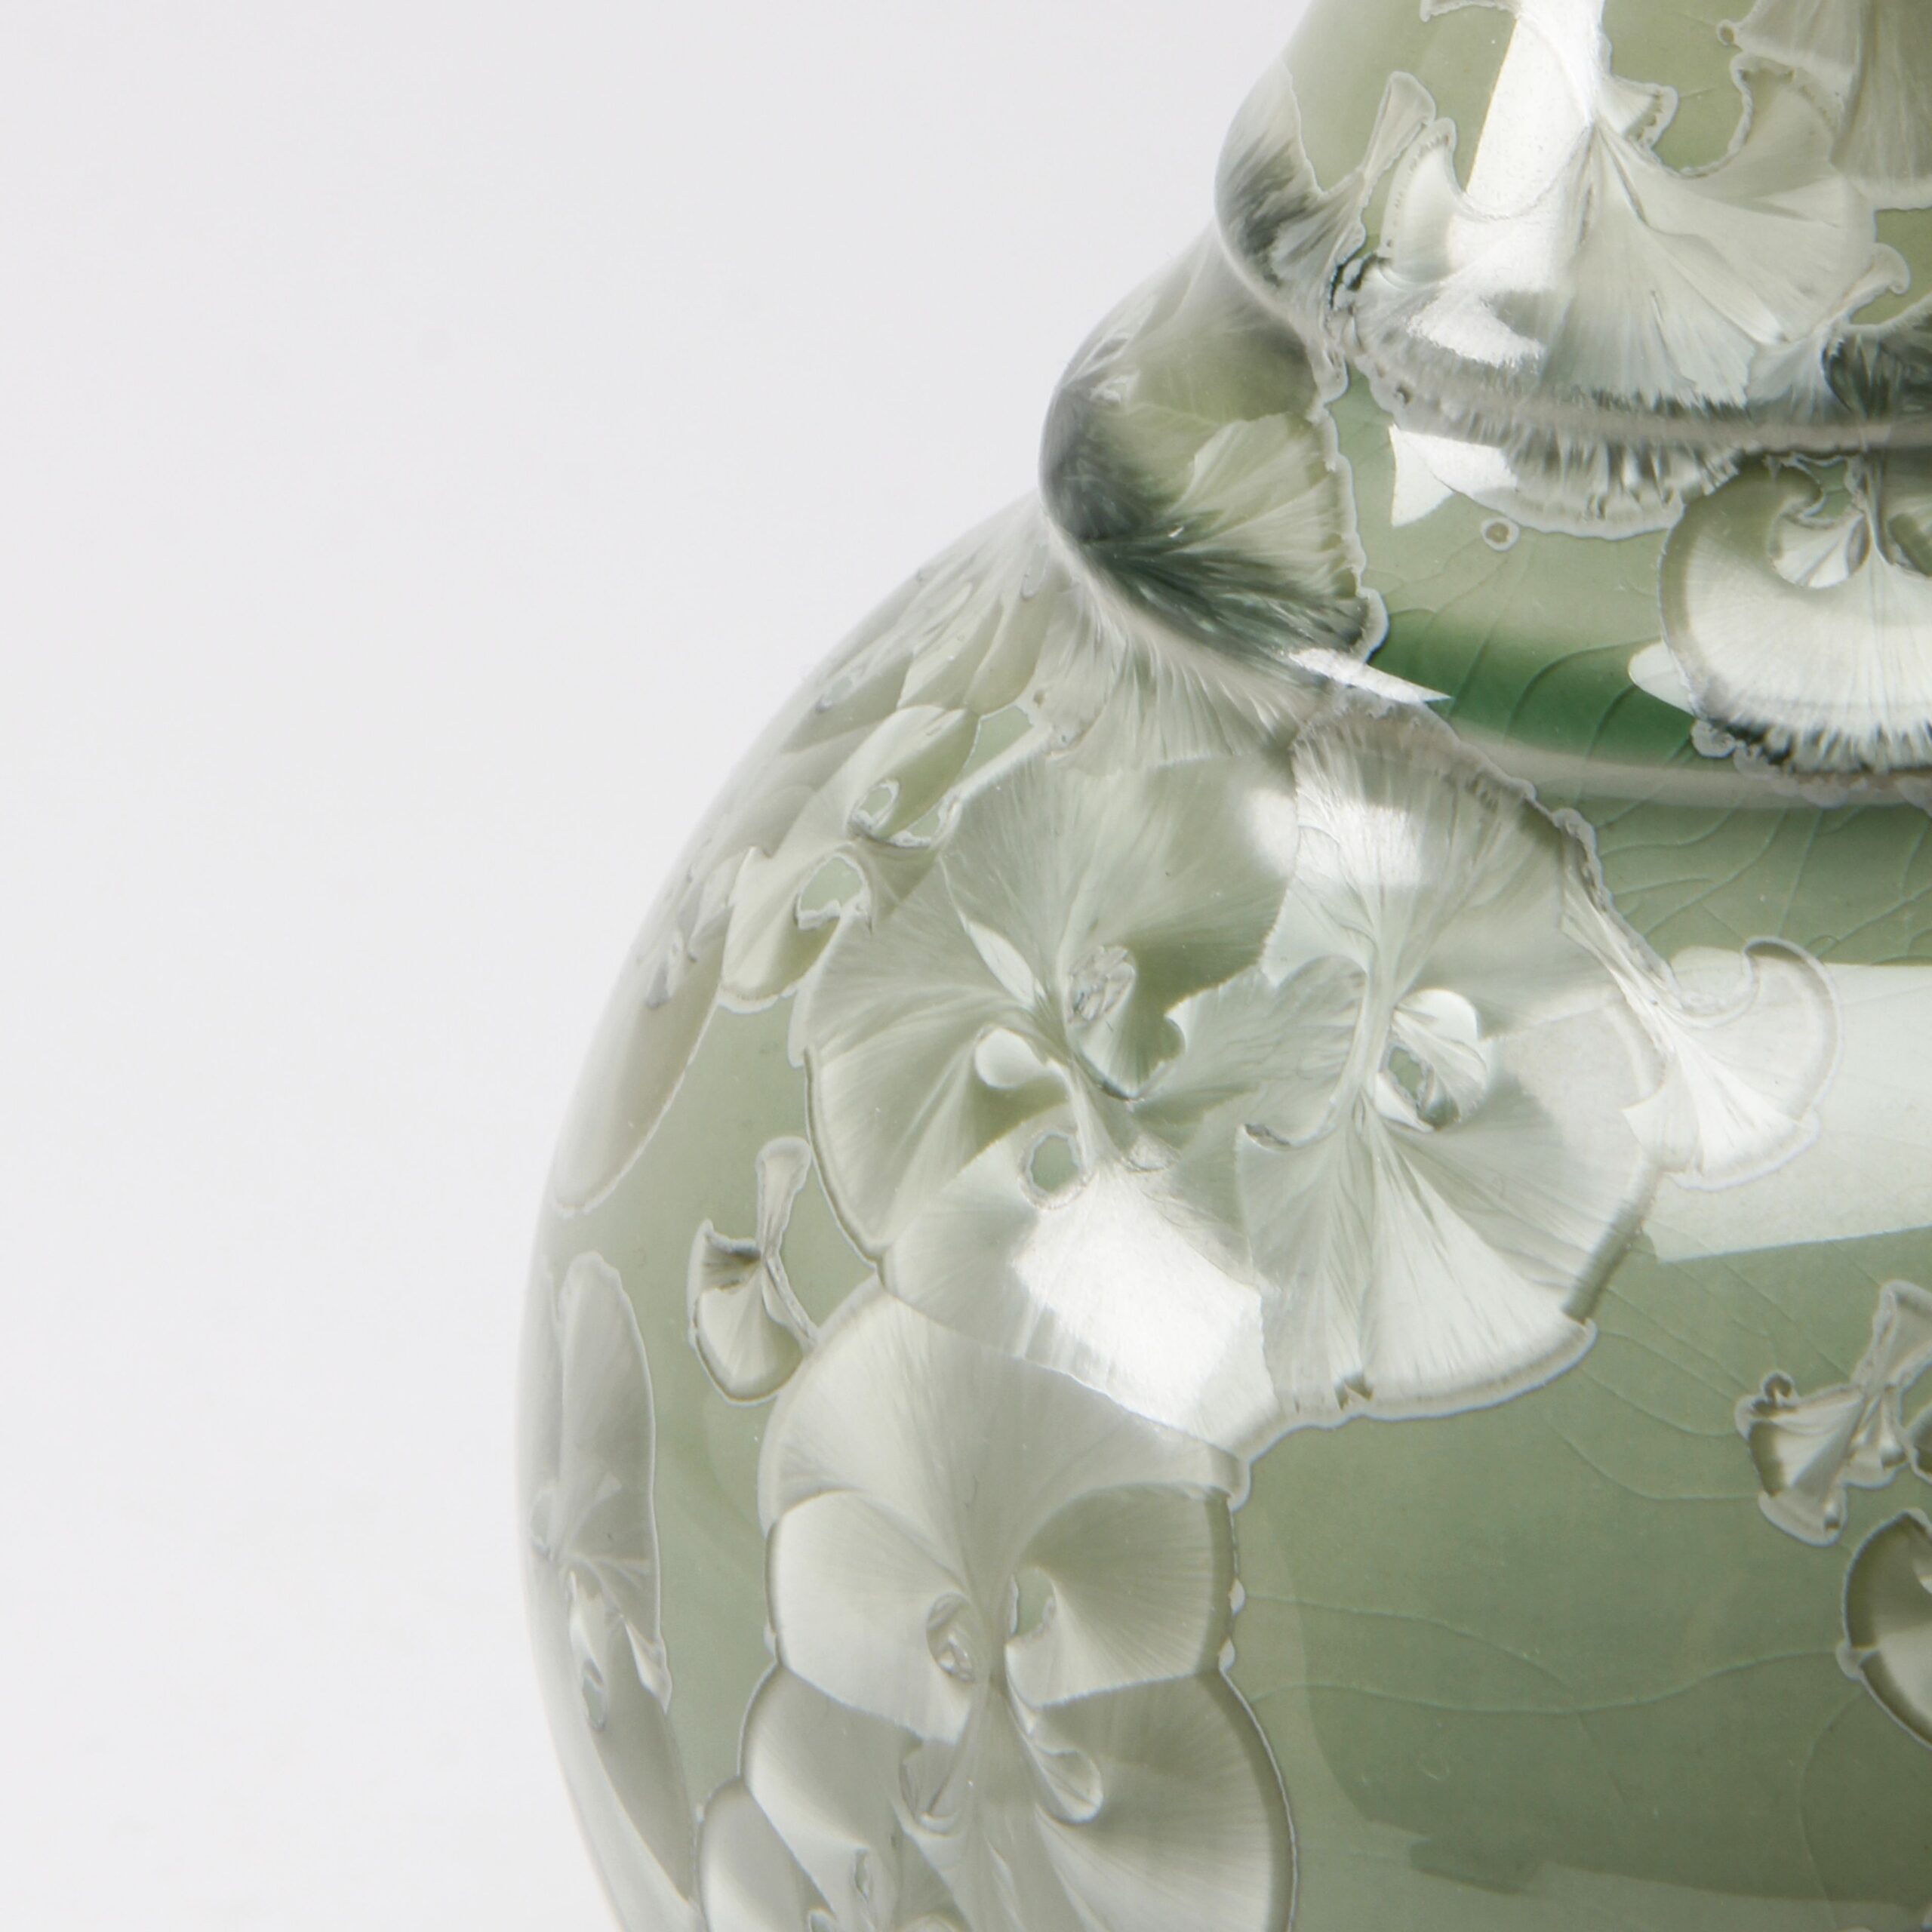 Yumiko Katsuya: Long Neck Vase – Green Product Image 3 of 4